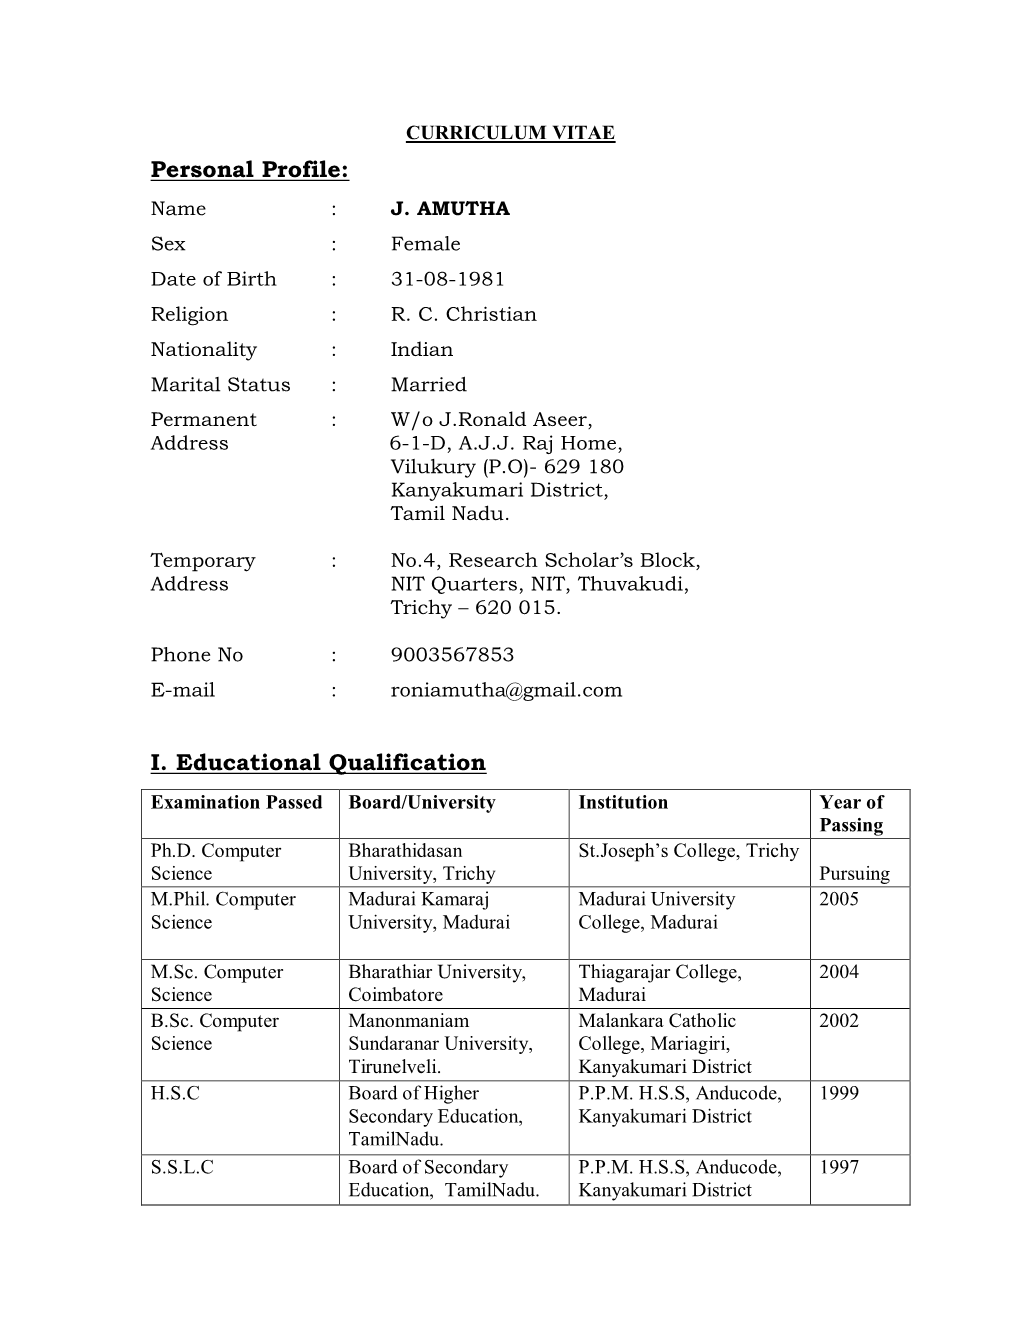 Personal Profile: I. Educational Qualification